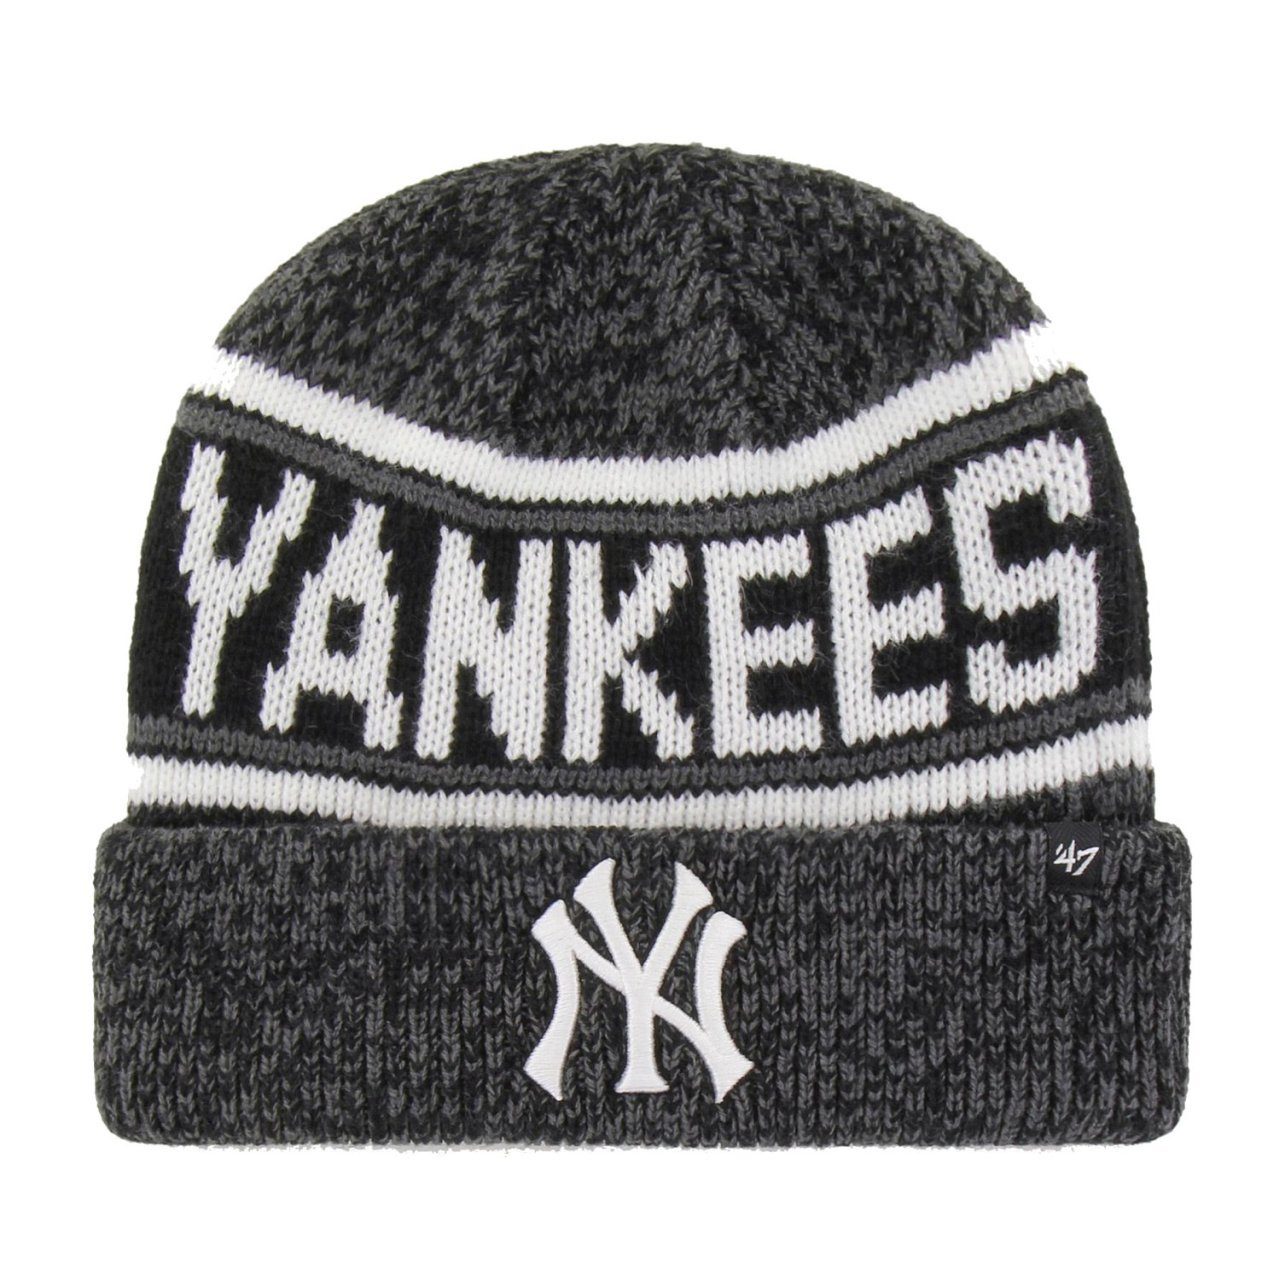 '47 Brand Fleecemütze Cuff Beanie McKoy New York Yankees